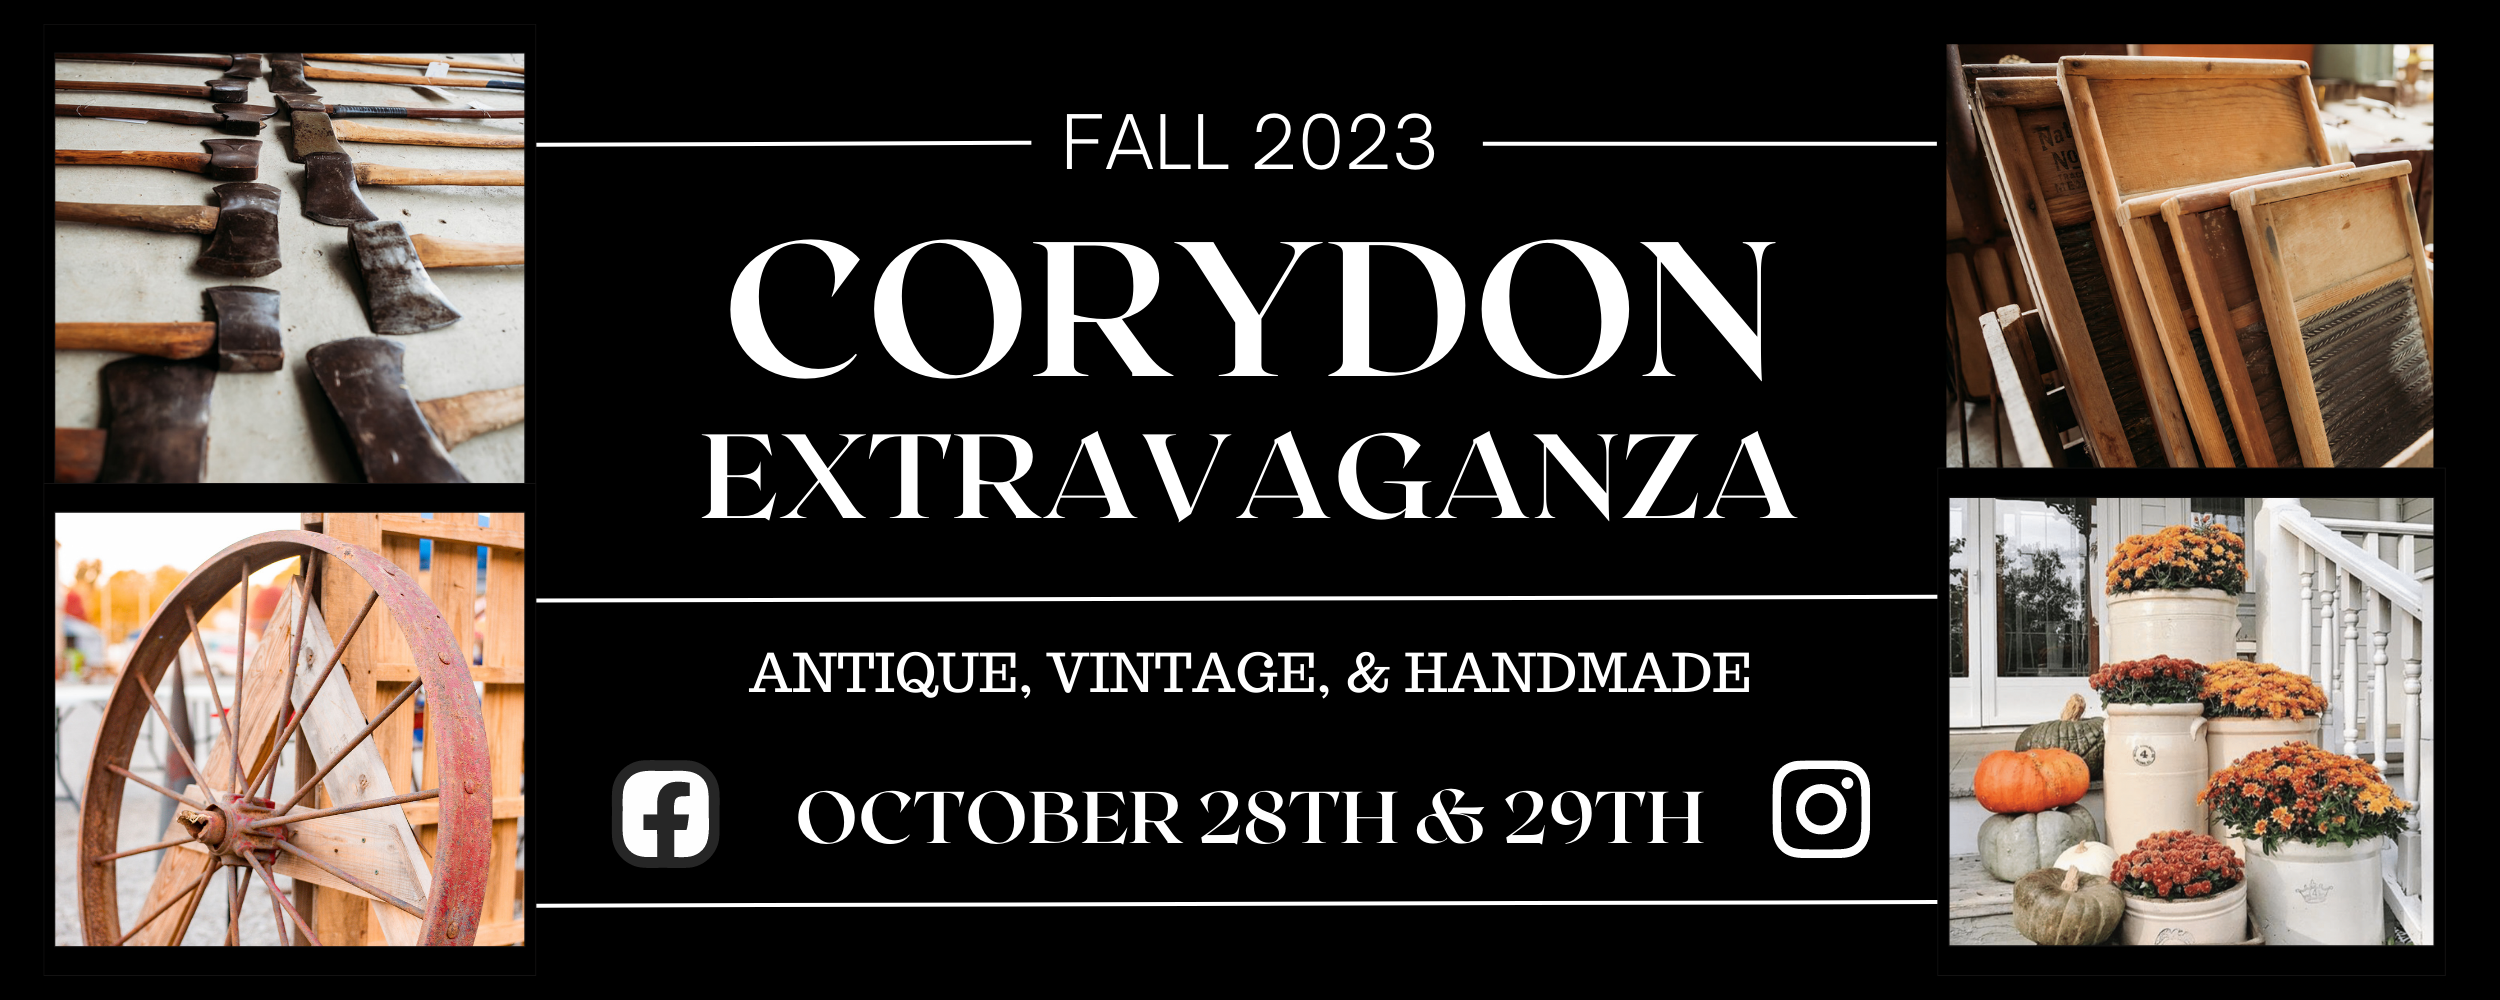 Corydon Extravaganza Fall 2023